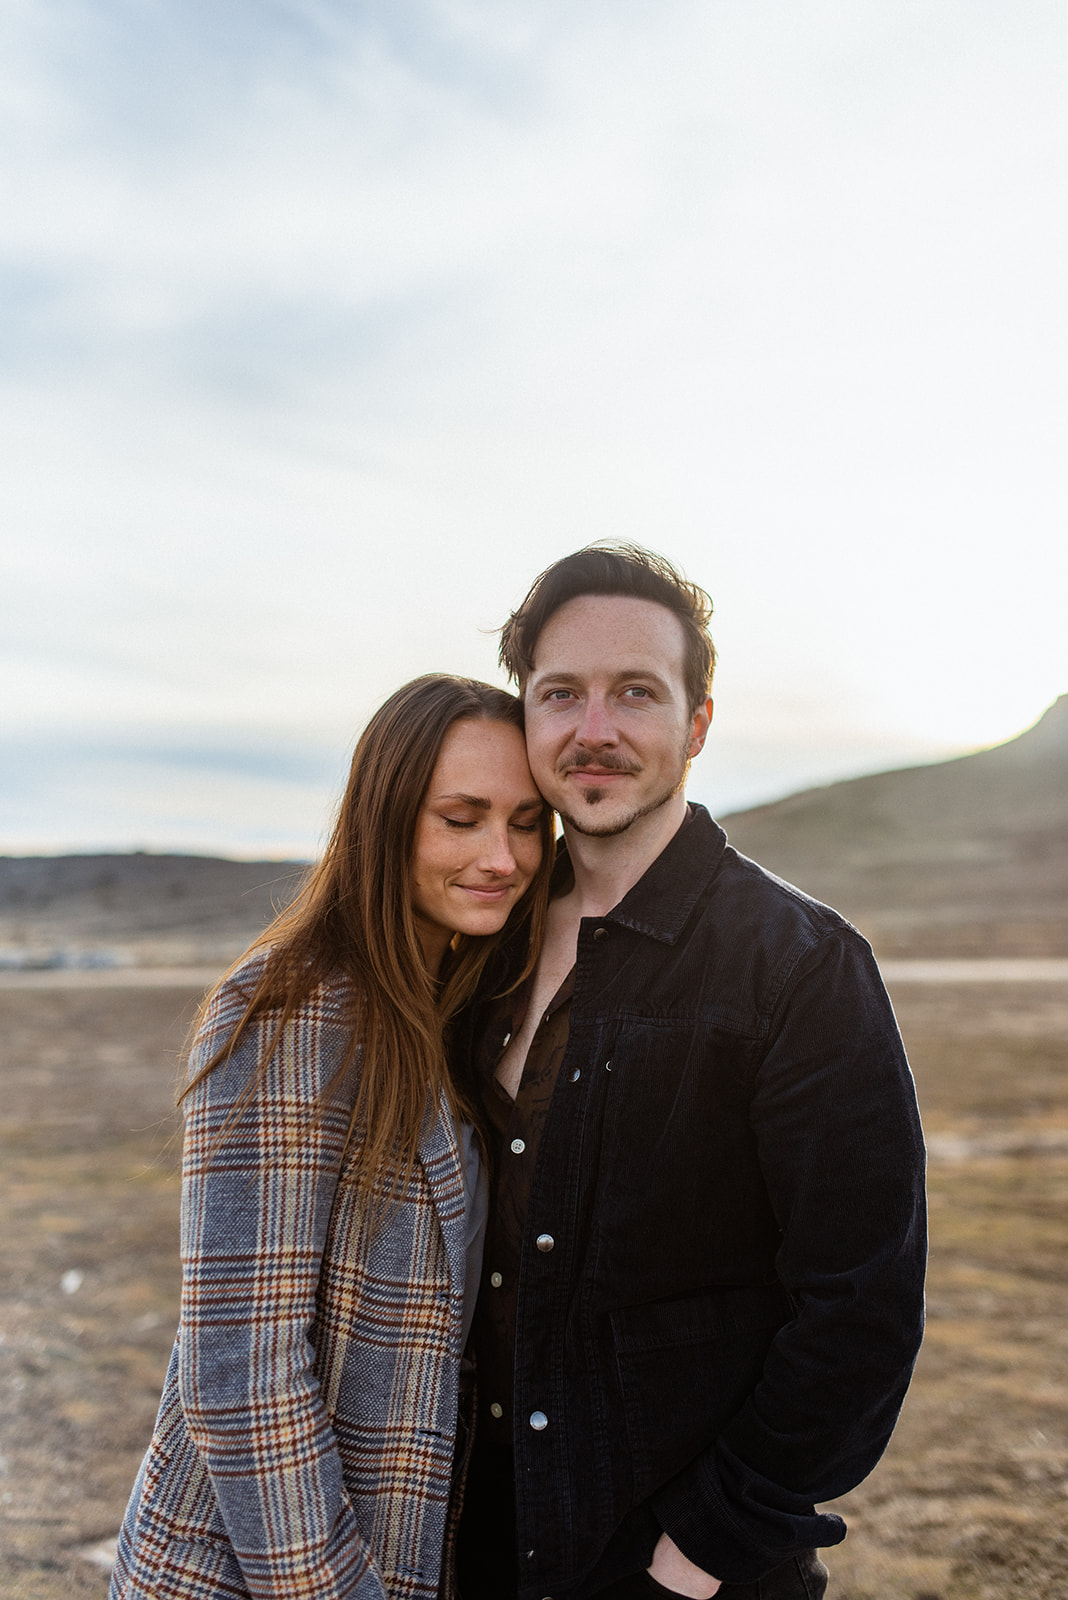 Utah west desert engagement couple photos, utah wedding photographer, documentary artistic photography Alyssa Sorenson